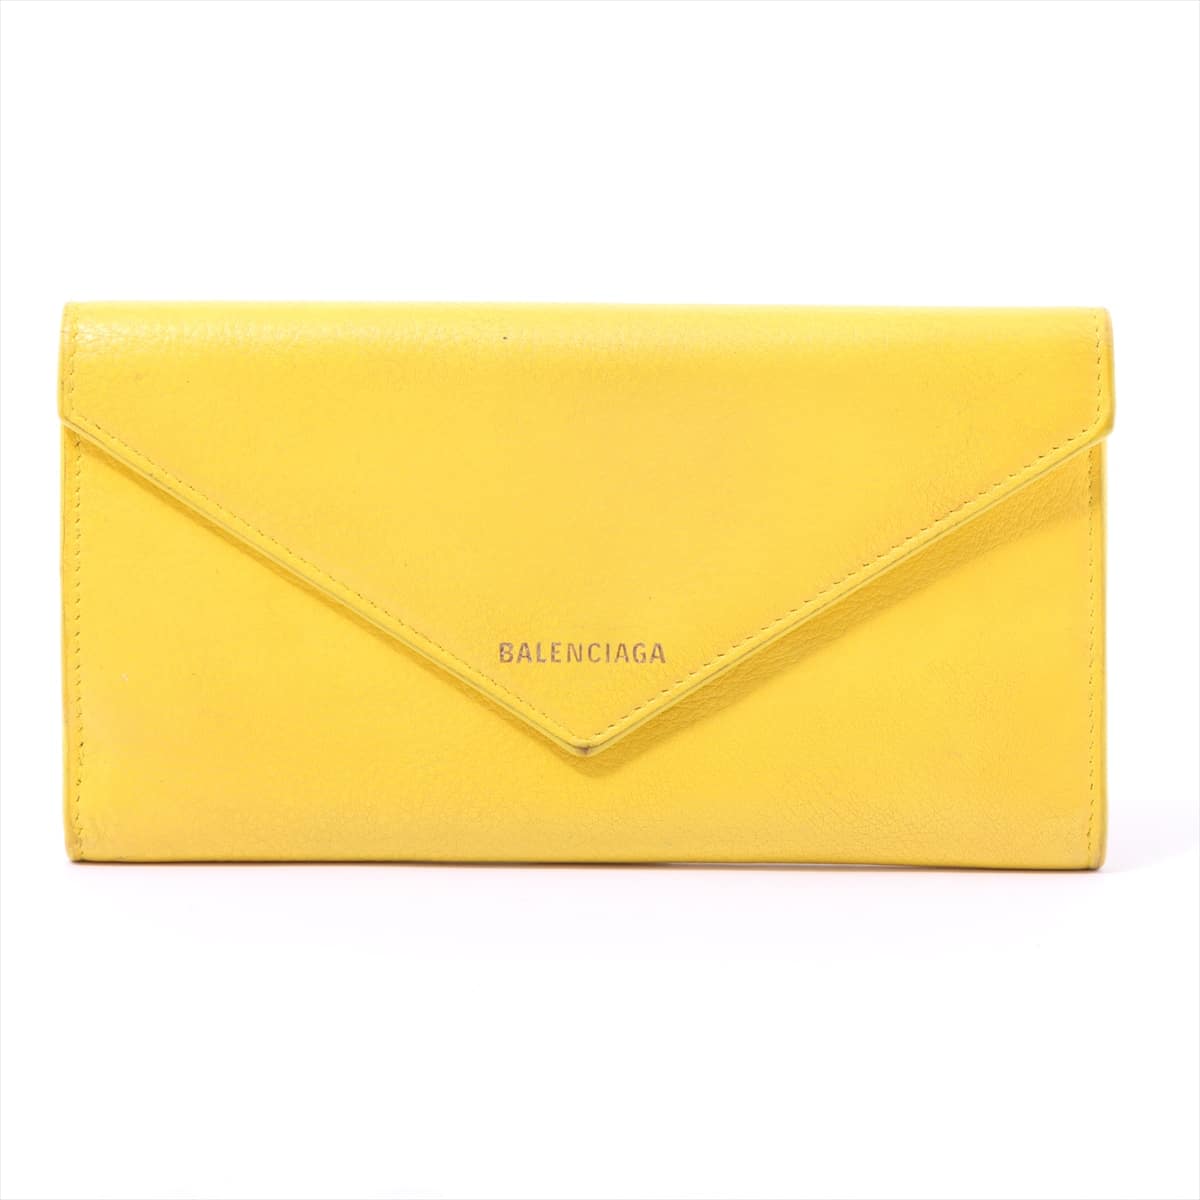 Balenciaga 499207 Leather Wallet Yellow